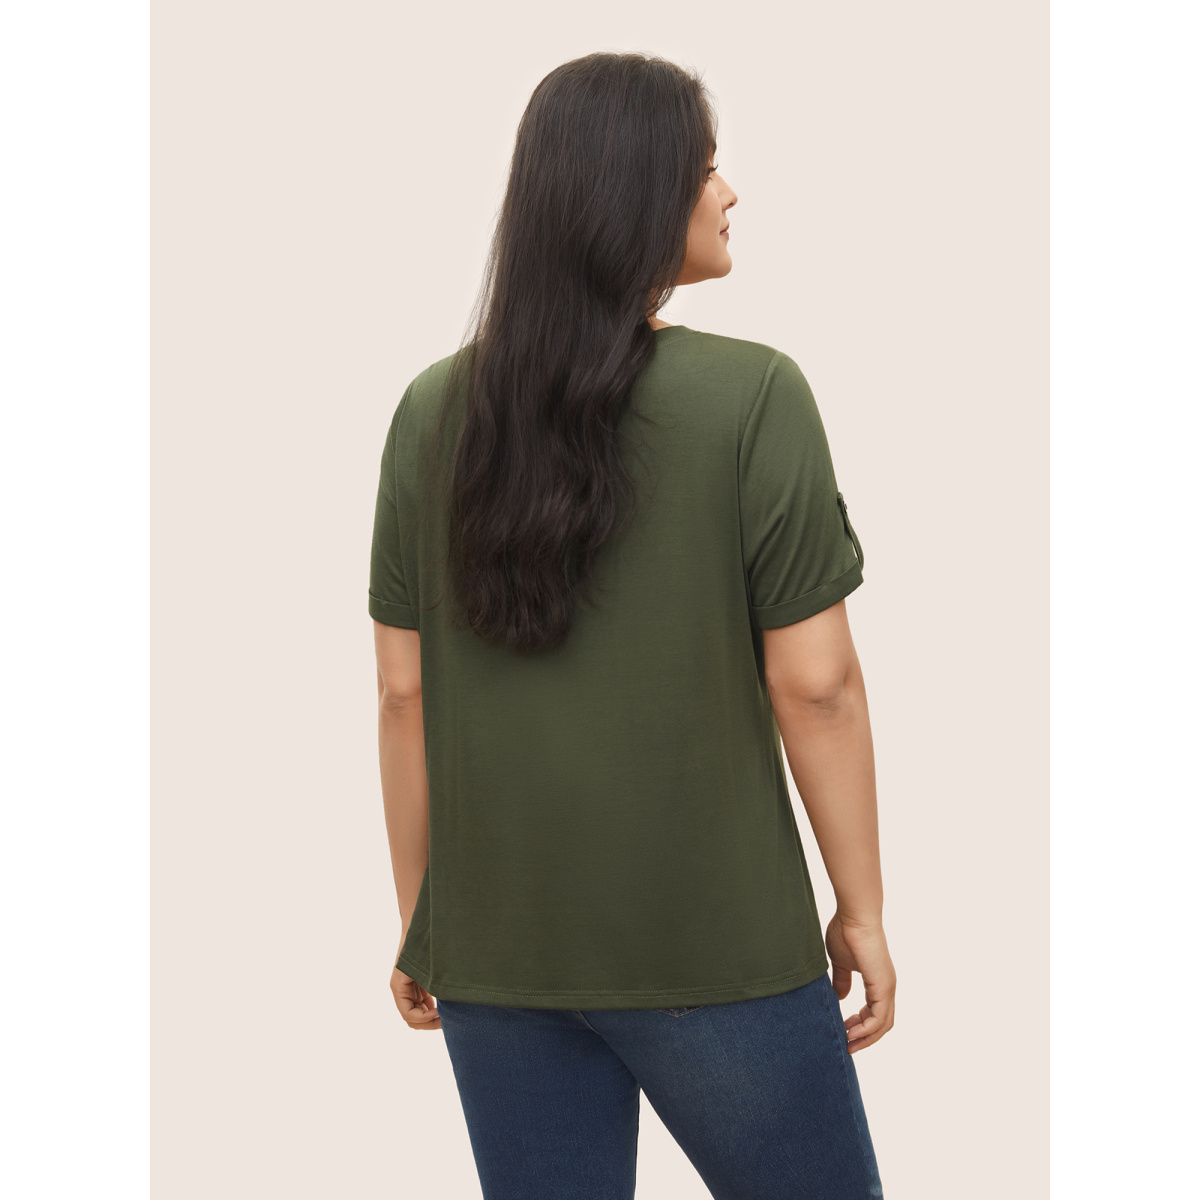 

Plus Size V Neck Solid Tab Sleeve T-shirt ArmyGreen Women Casual Roll Hem Plain V-neck Everyday T-shirts BloomChic